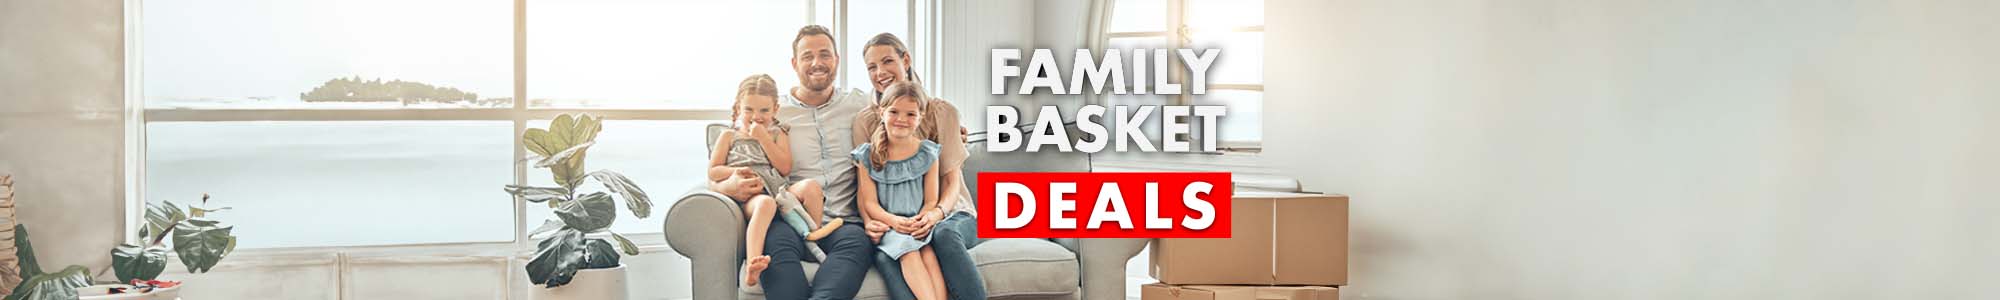 Family Basket Deals